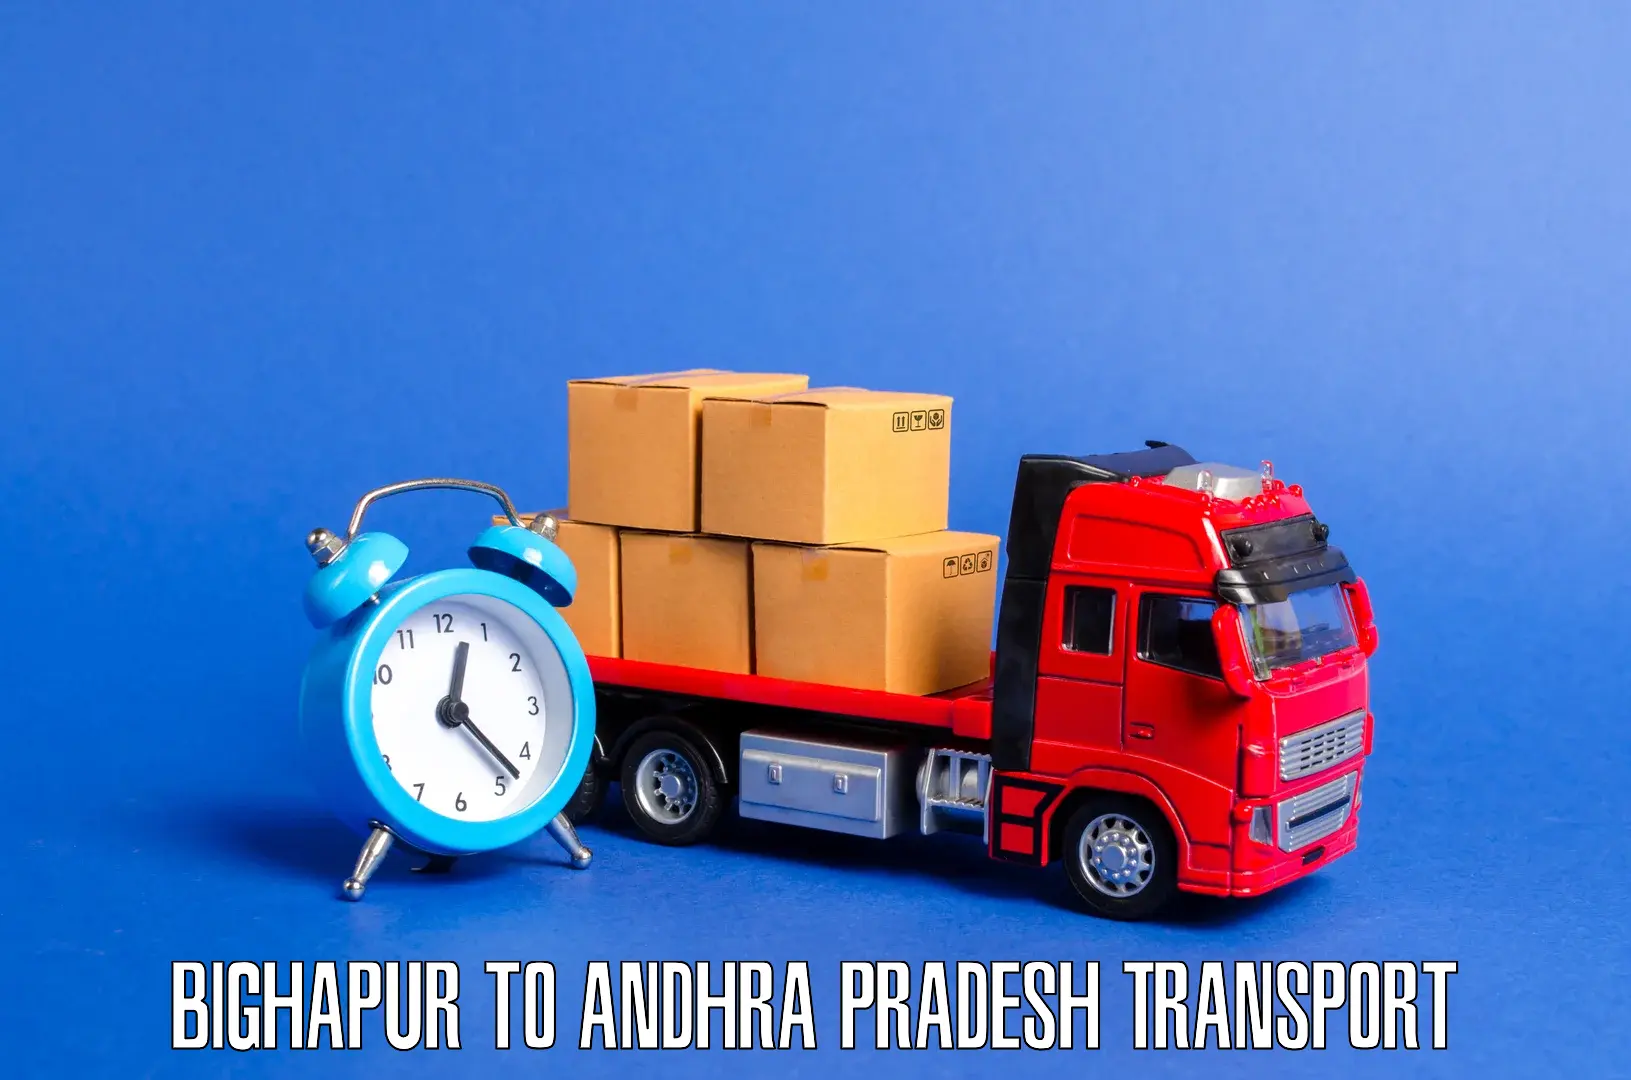 Daily parcel service transport Bighapur to Yemmiganur